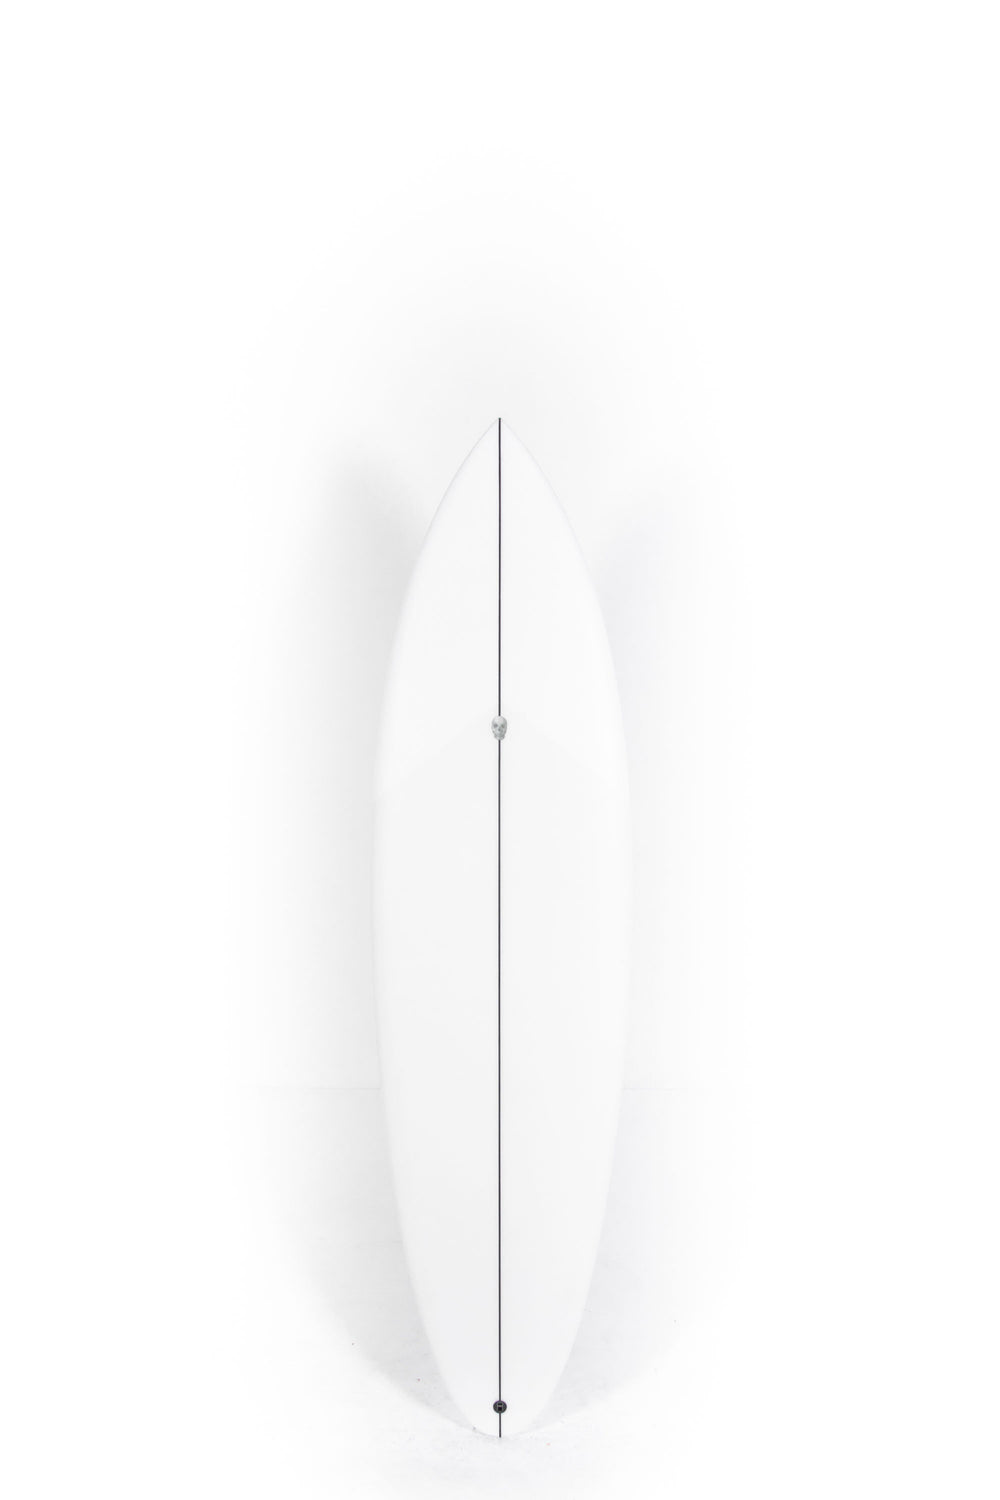 Pukas-Surf-Shop-Christenson-Surfboards-Osprey-Chris-Christenson-6_6